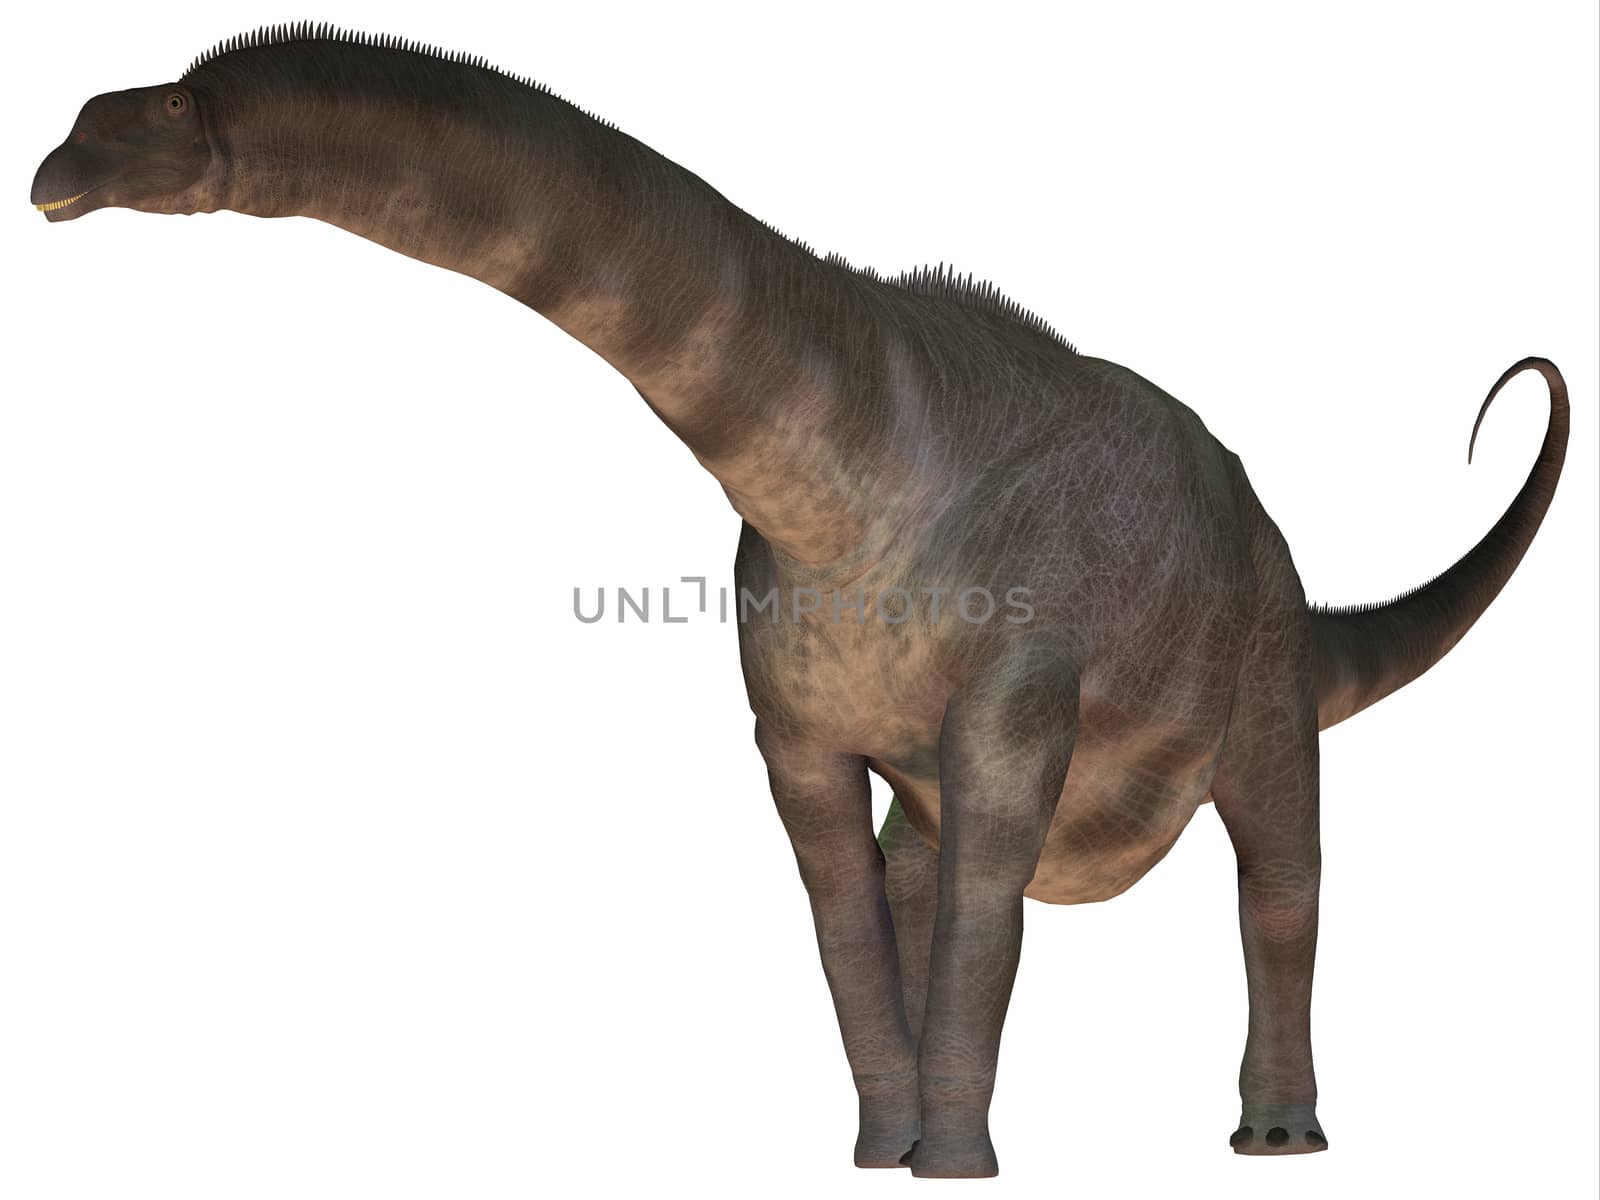 Argentinosaurus was a titanosaur sauropod dinosaur from the Cretaceous epoch of Argentina.